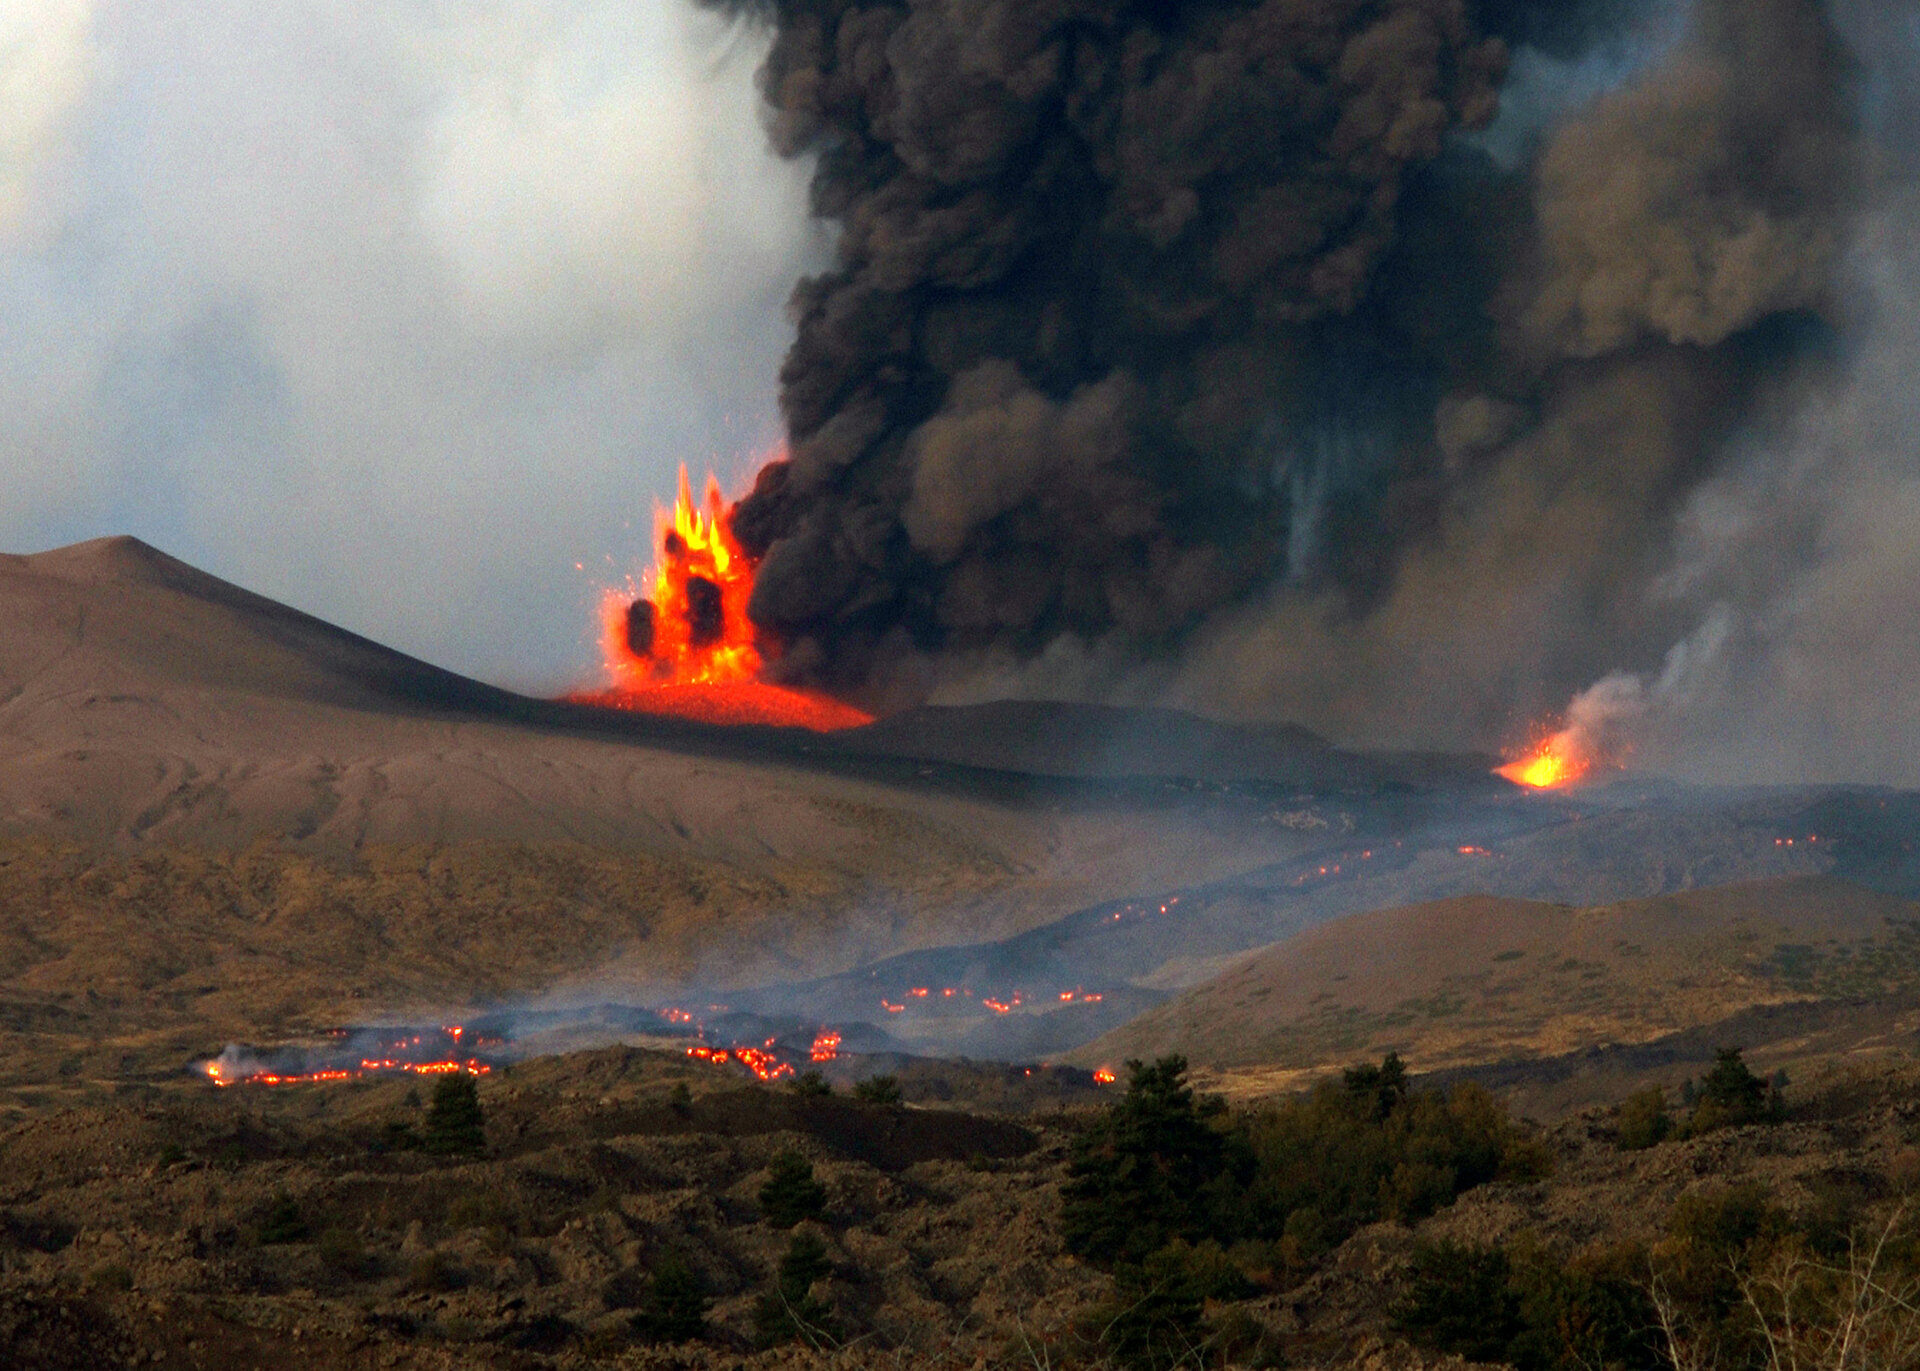 Mount Etna erupting